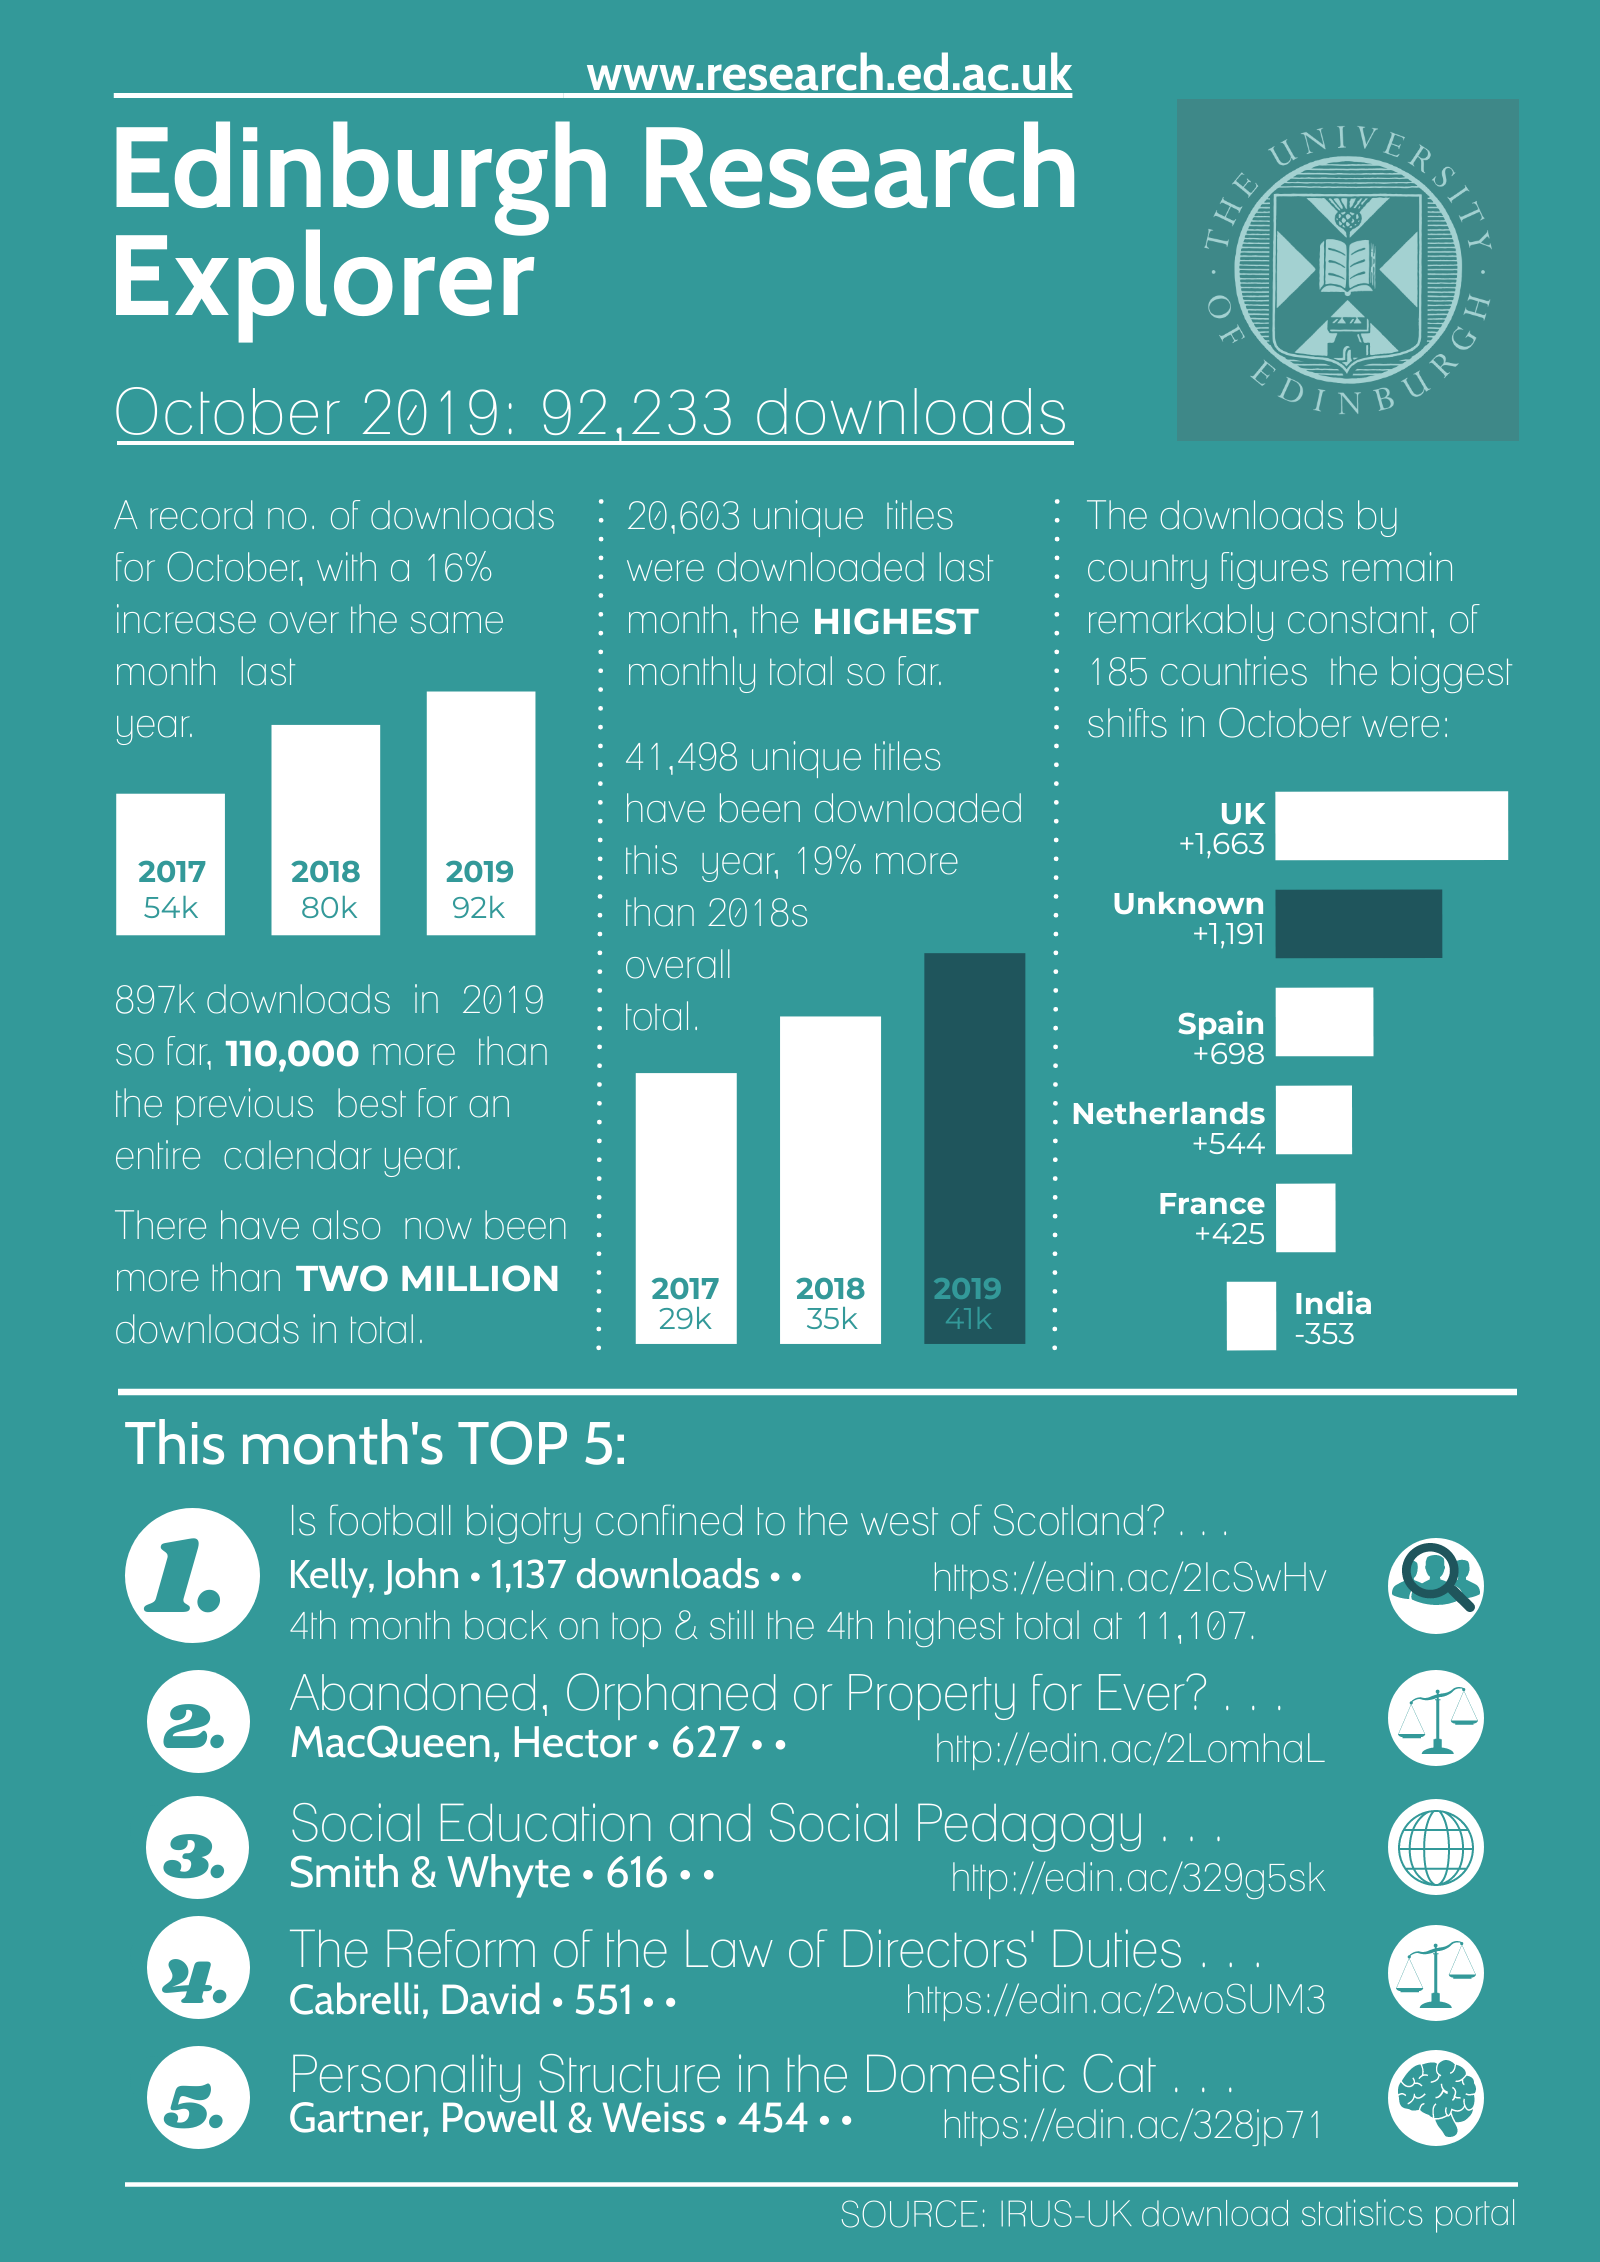 Edinburgh Research Explorer: October 2019 downloads infographic